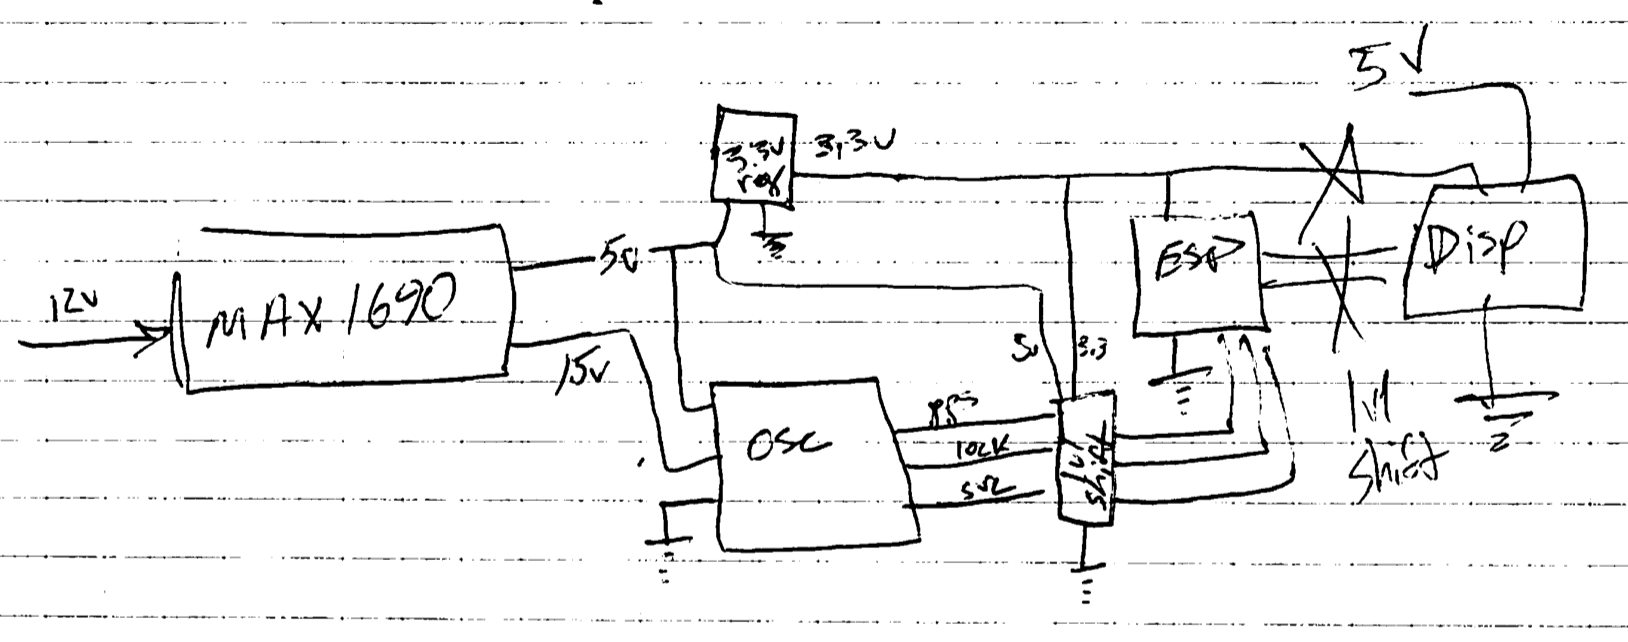 Rough, handwritten block diagram for the atomic clock